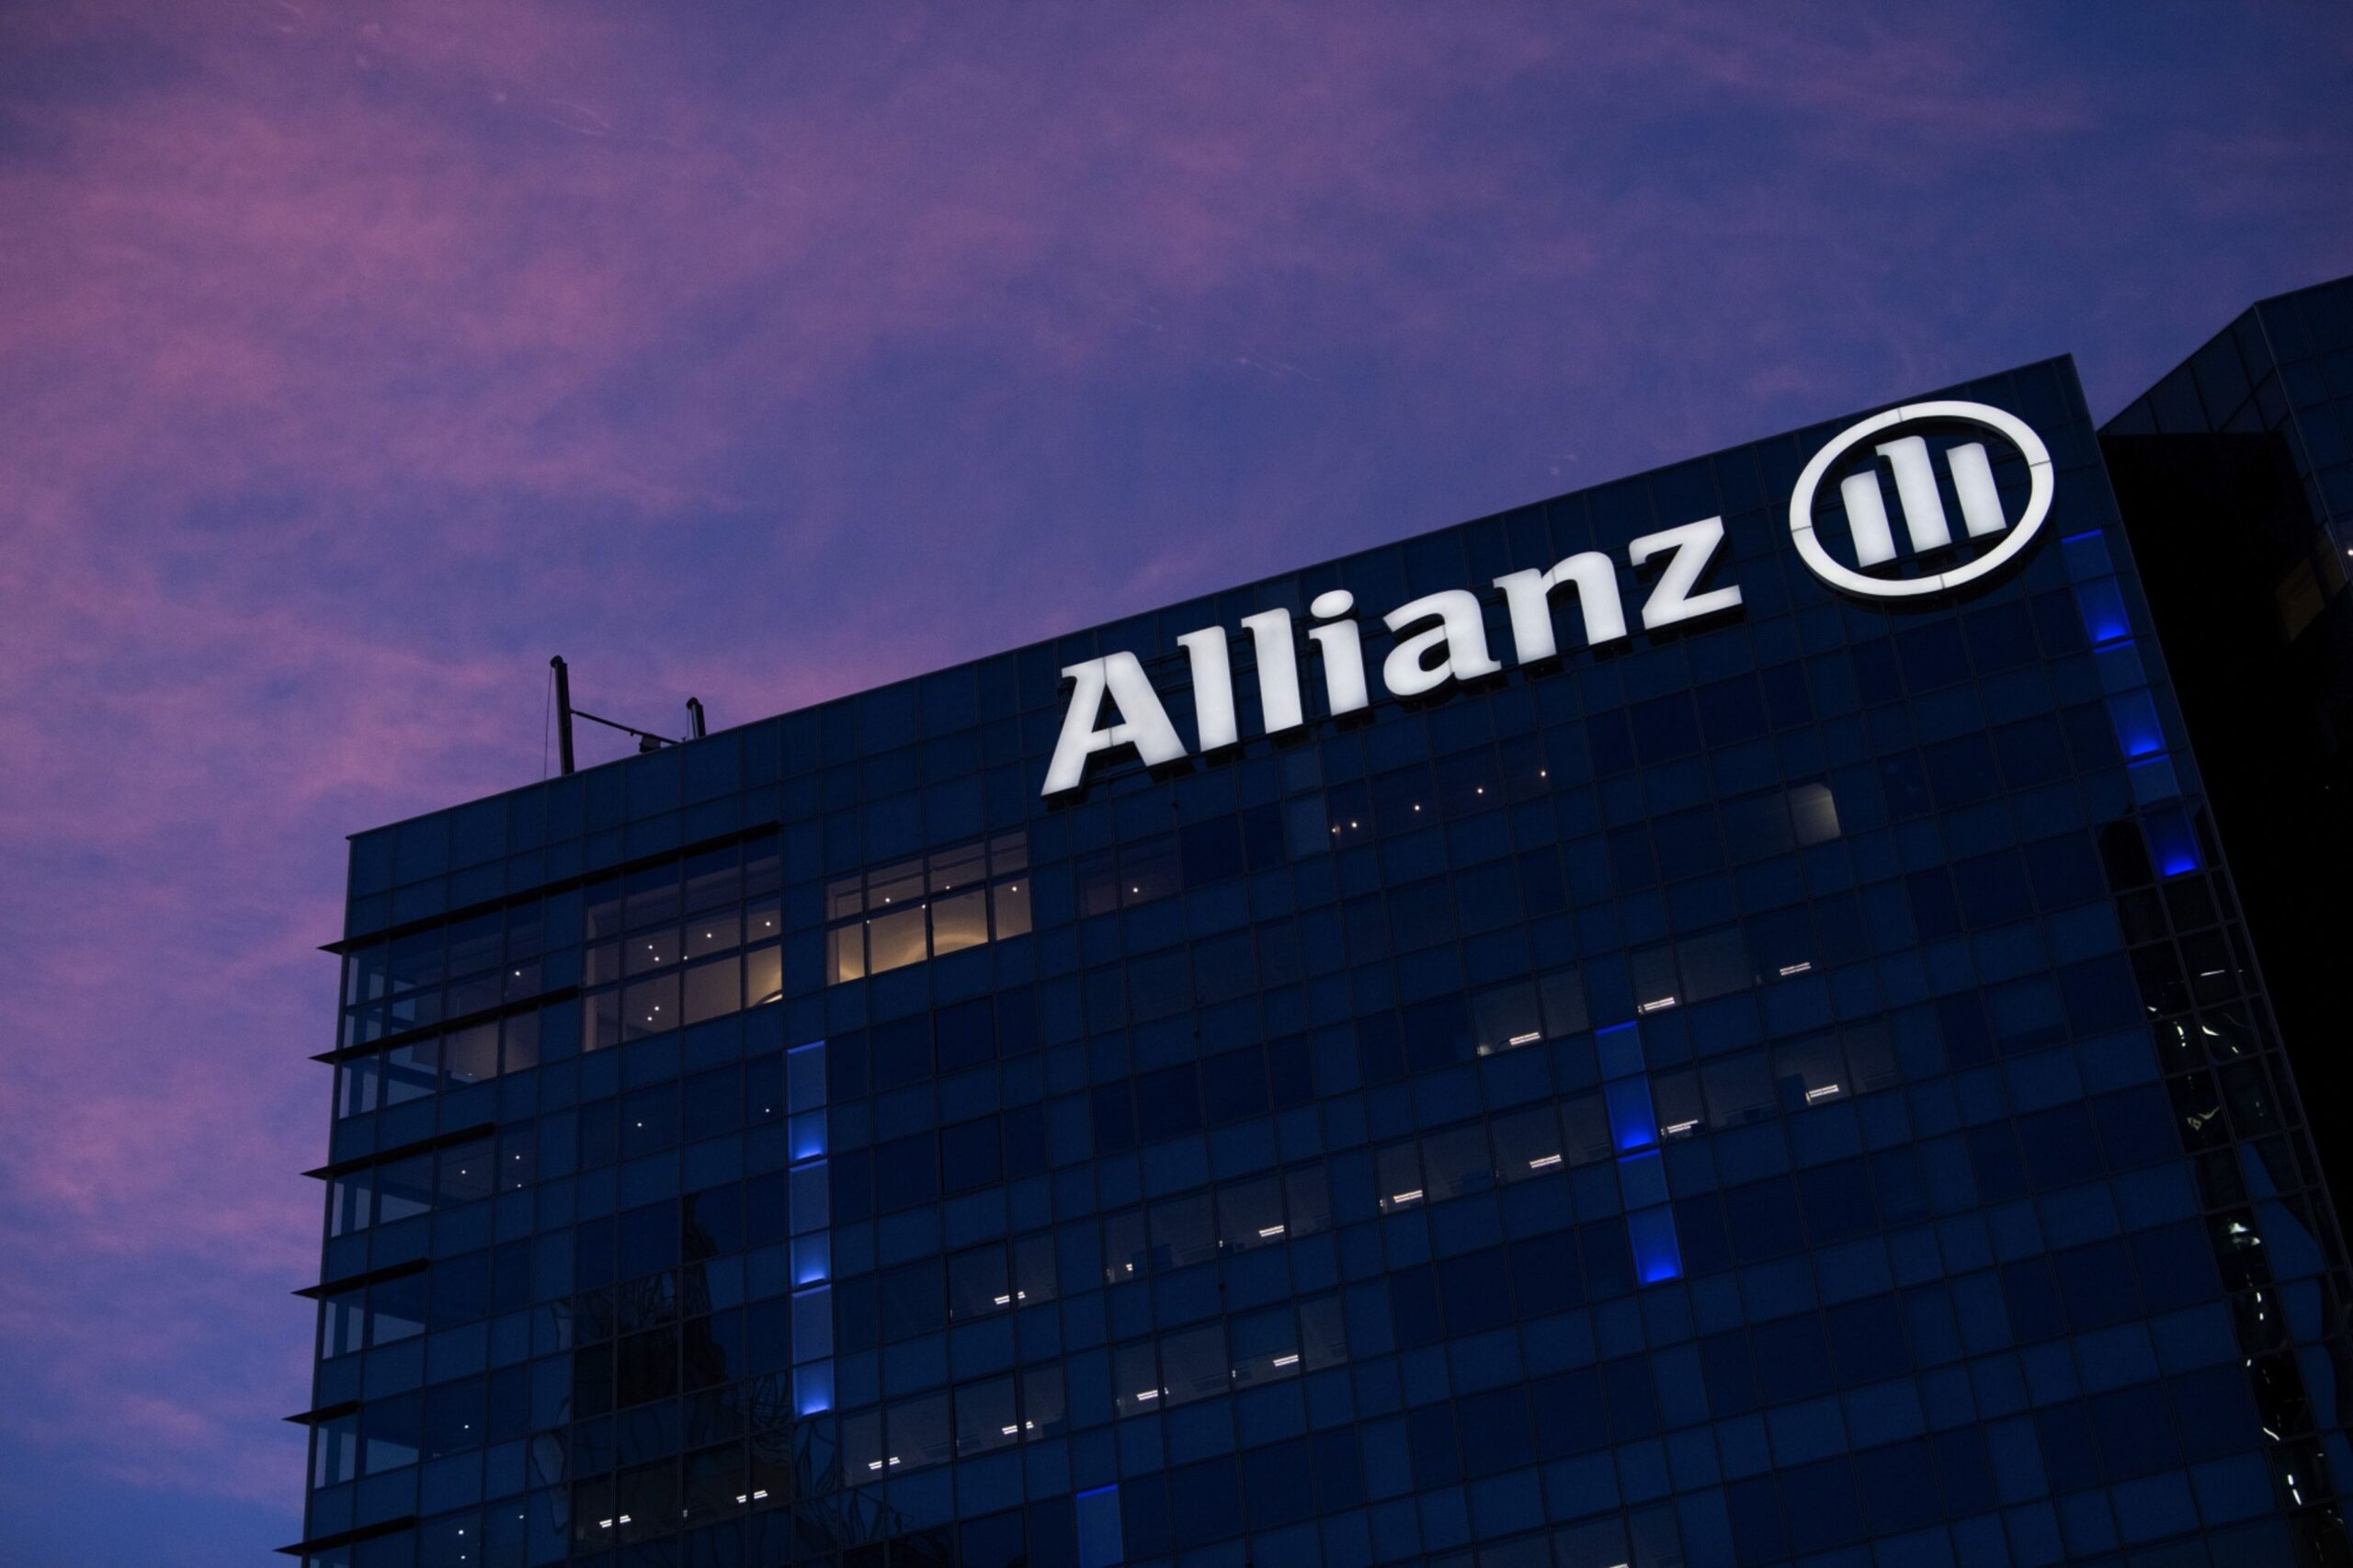 Allianz hissesi: Satış artışı planlanıyor - Allianz hisse